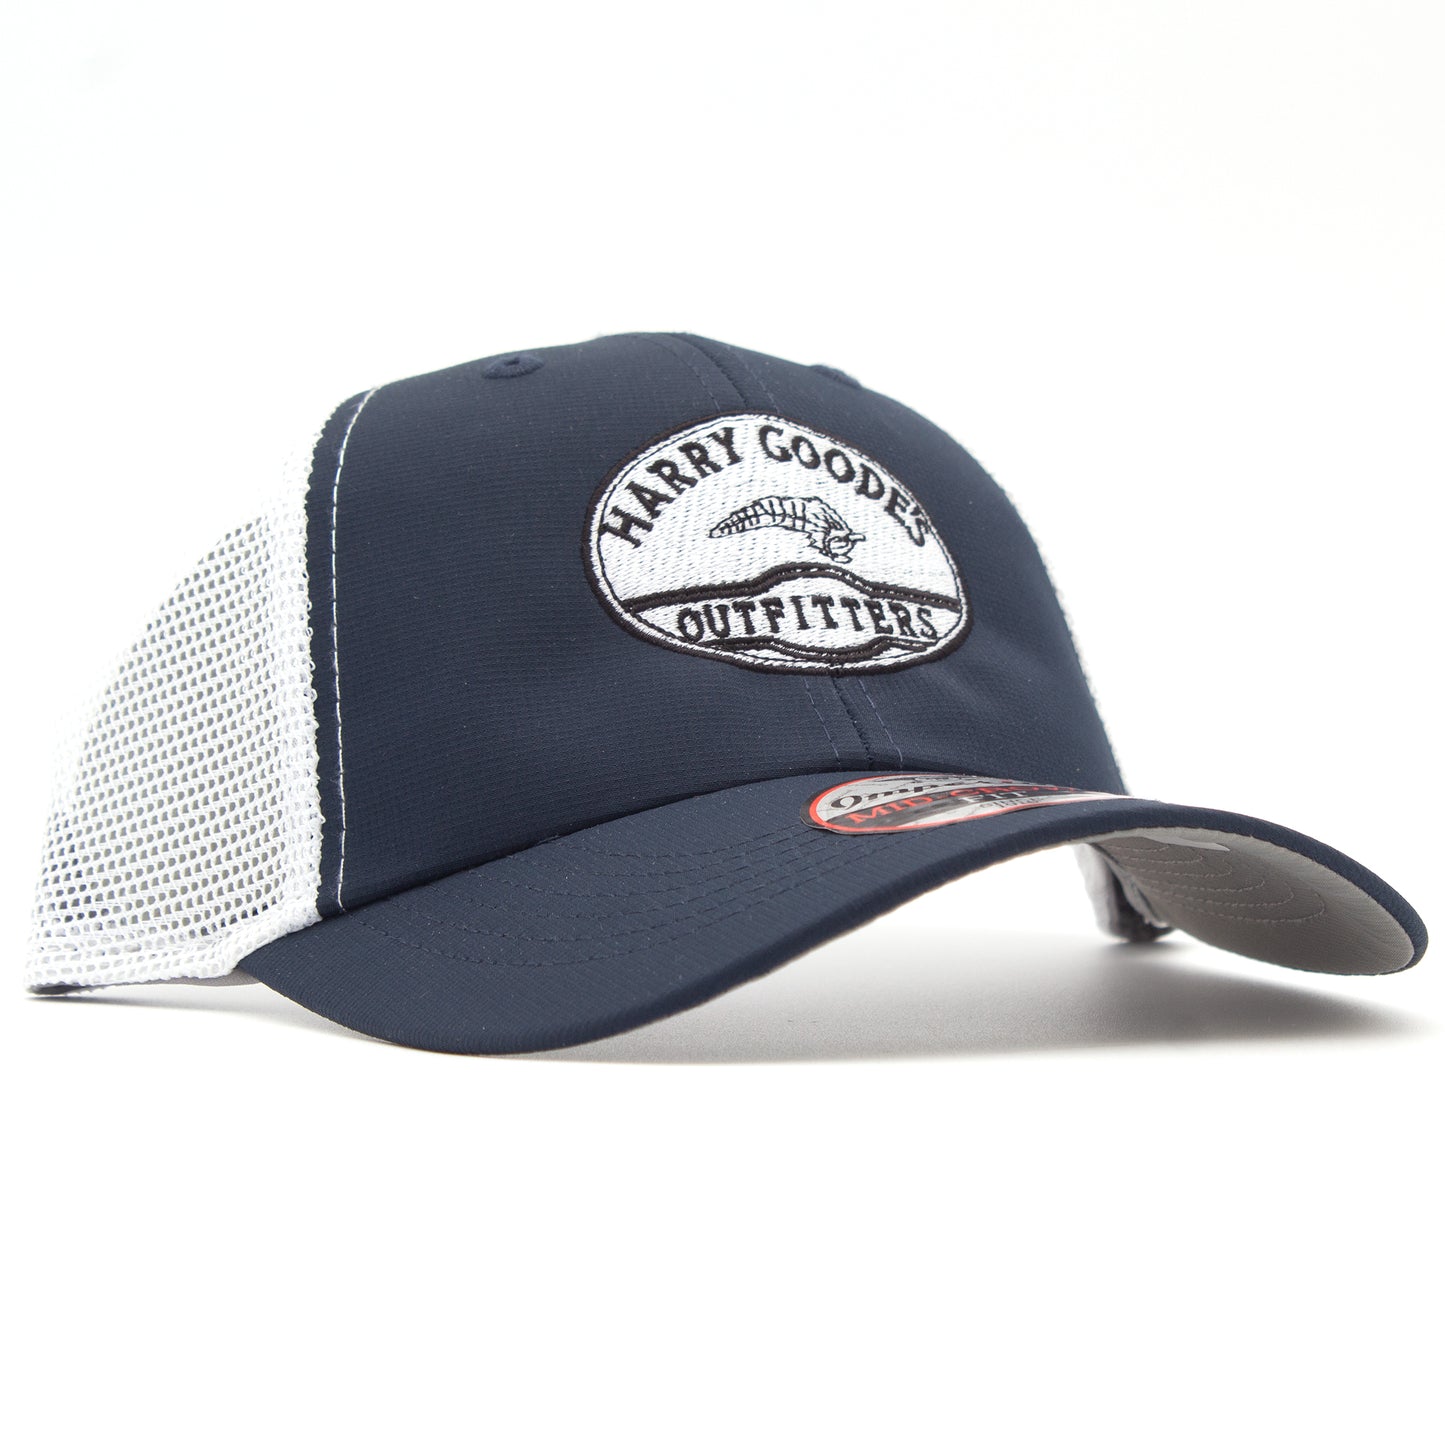 Harry Goode’s Logo Original Sport Mesh Hat